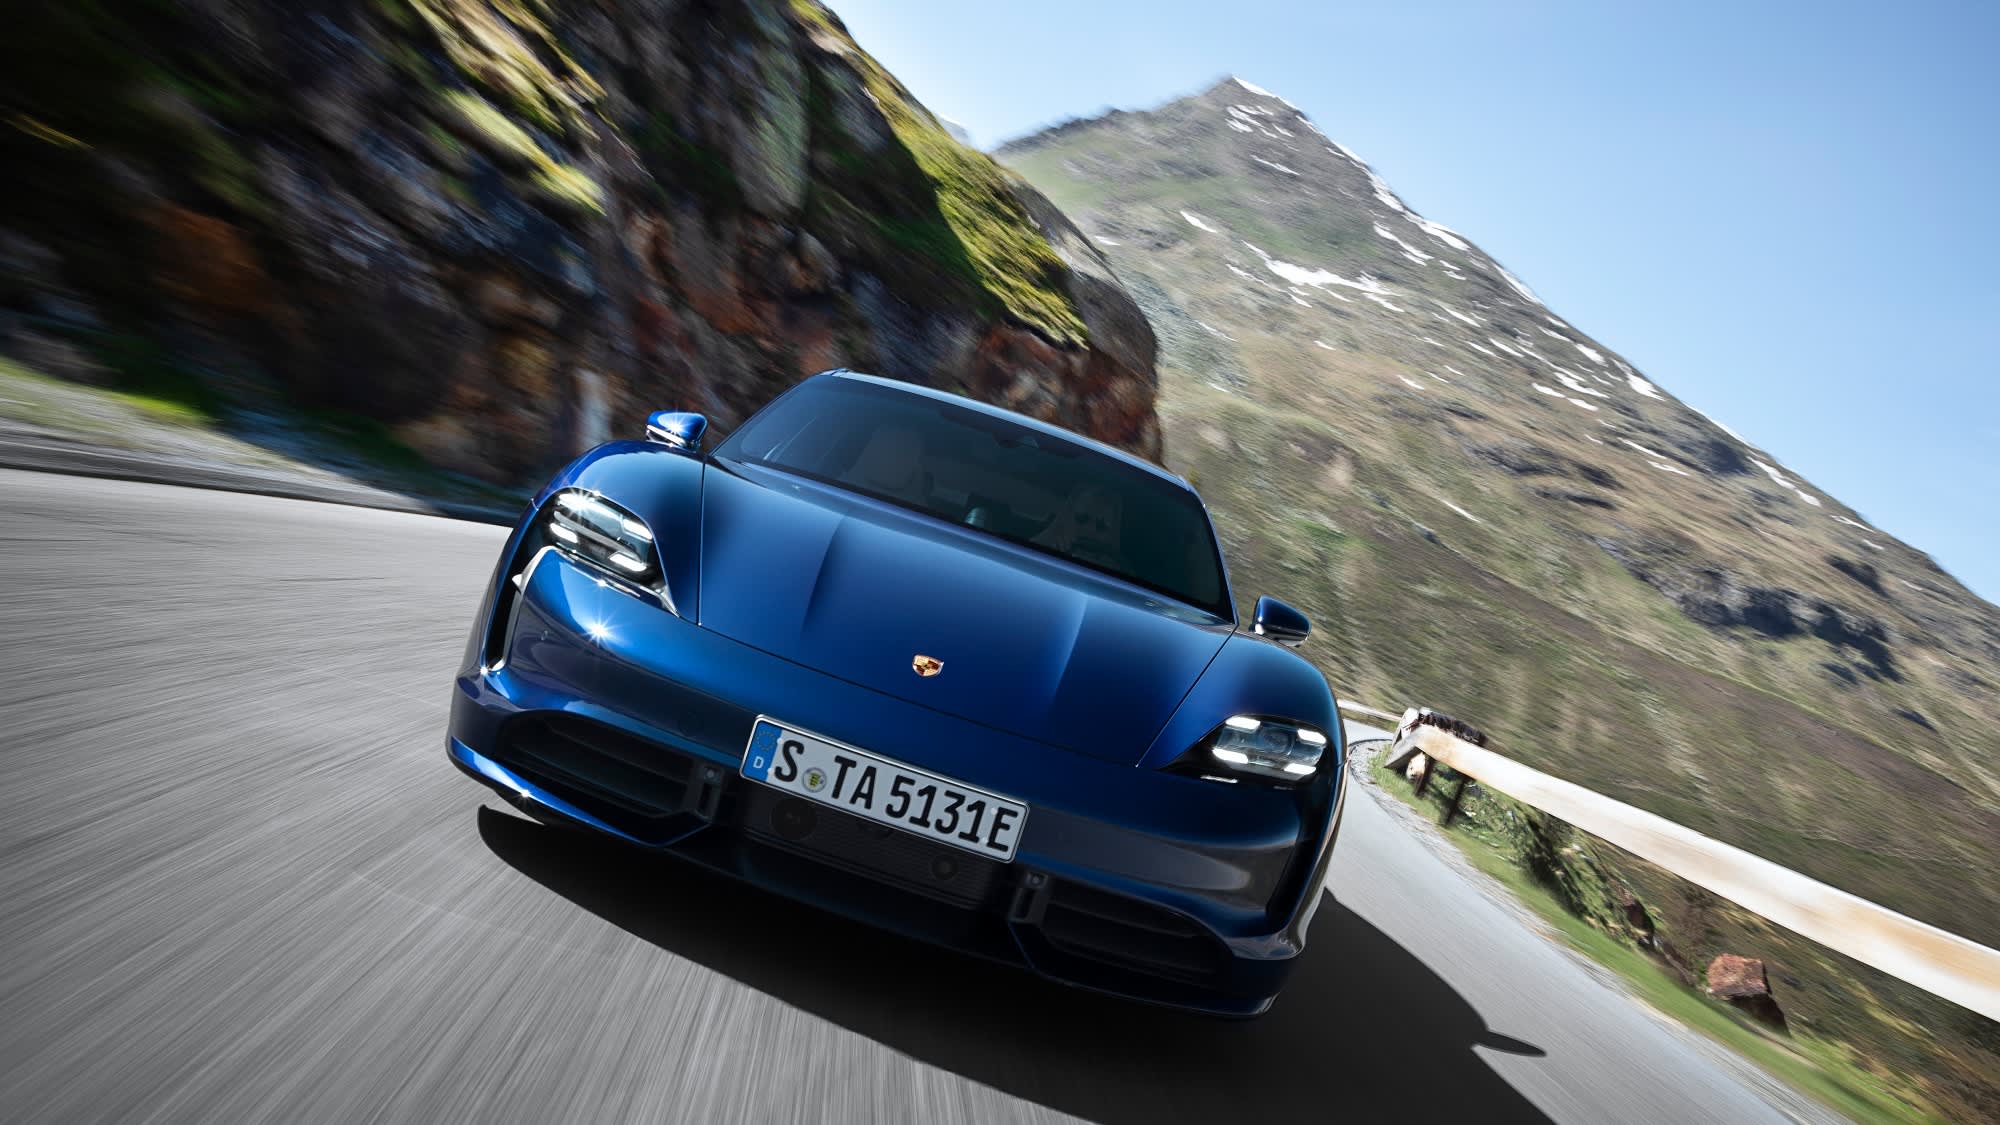 Porsche’s ambitious EV plans don’t include an all-electric 911